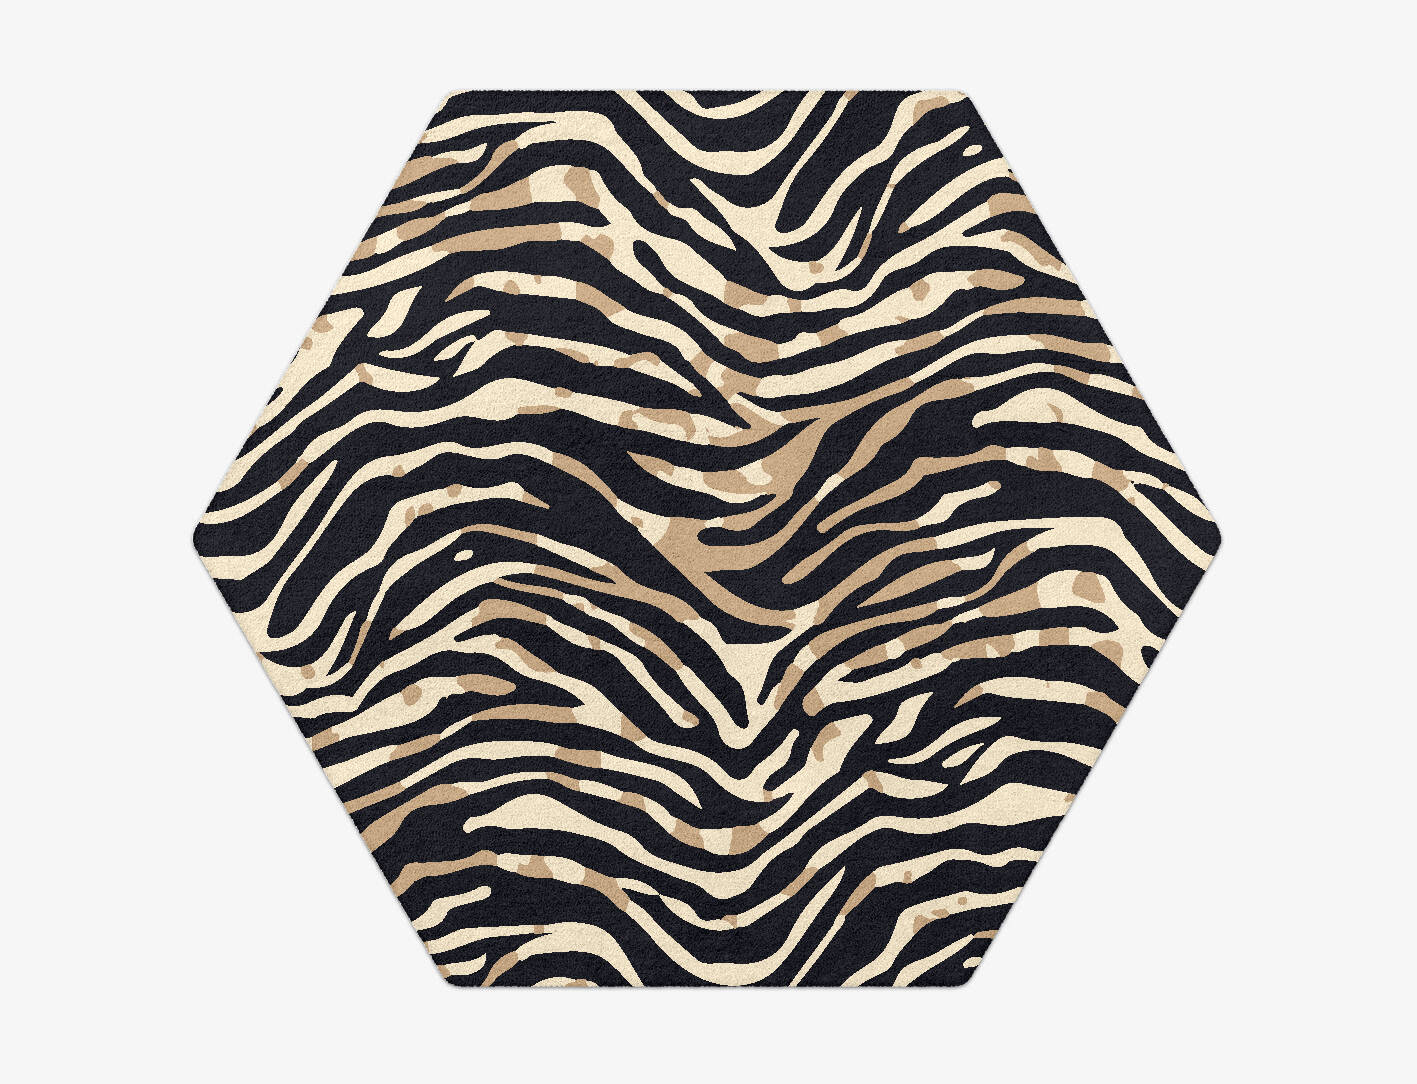 Tiger Stripes Animal Prints Hexagon Hand Tufted Pure Wool Custom Rug by Rug Artisan